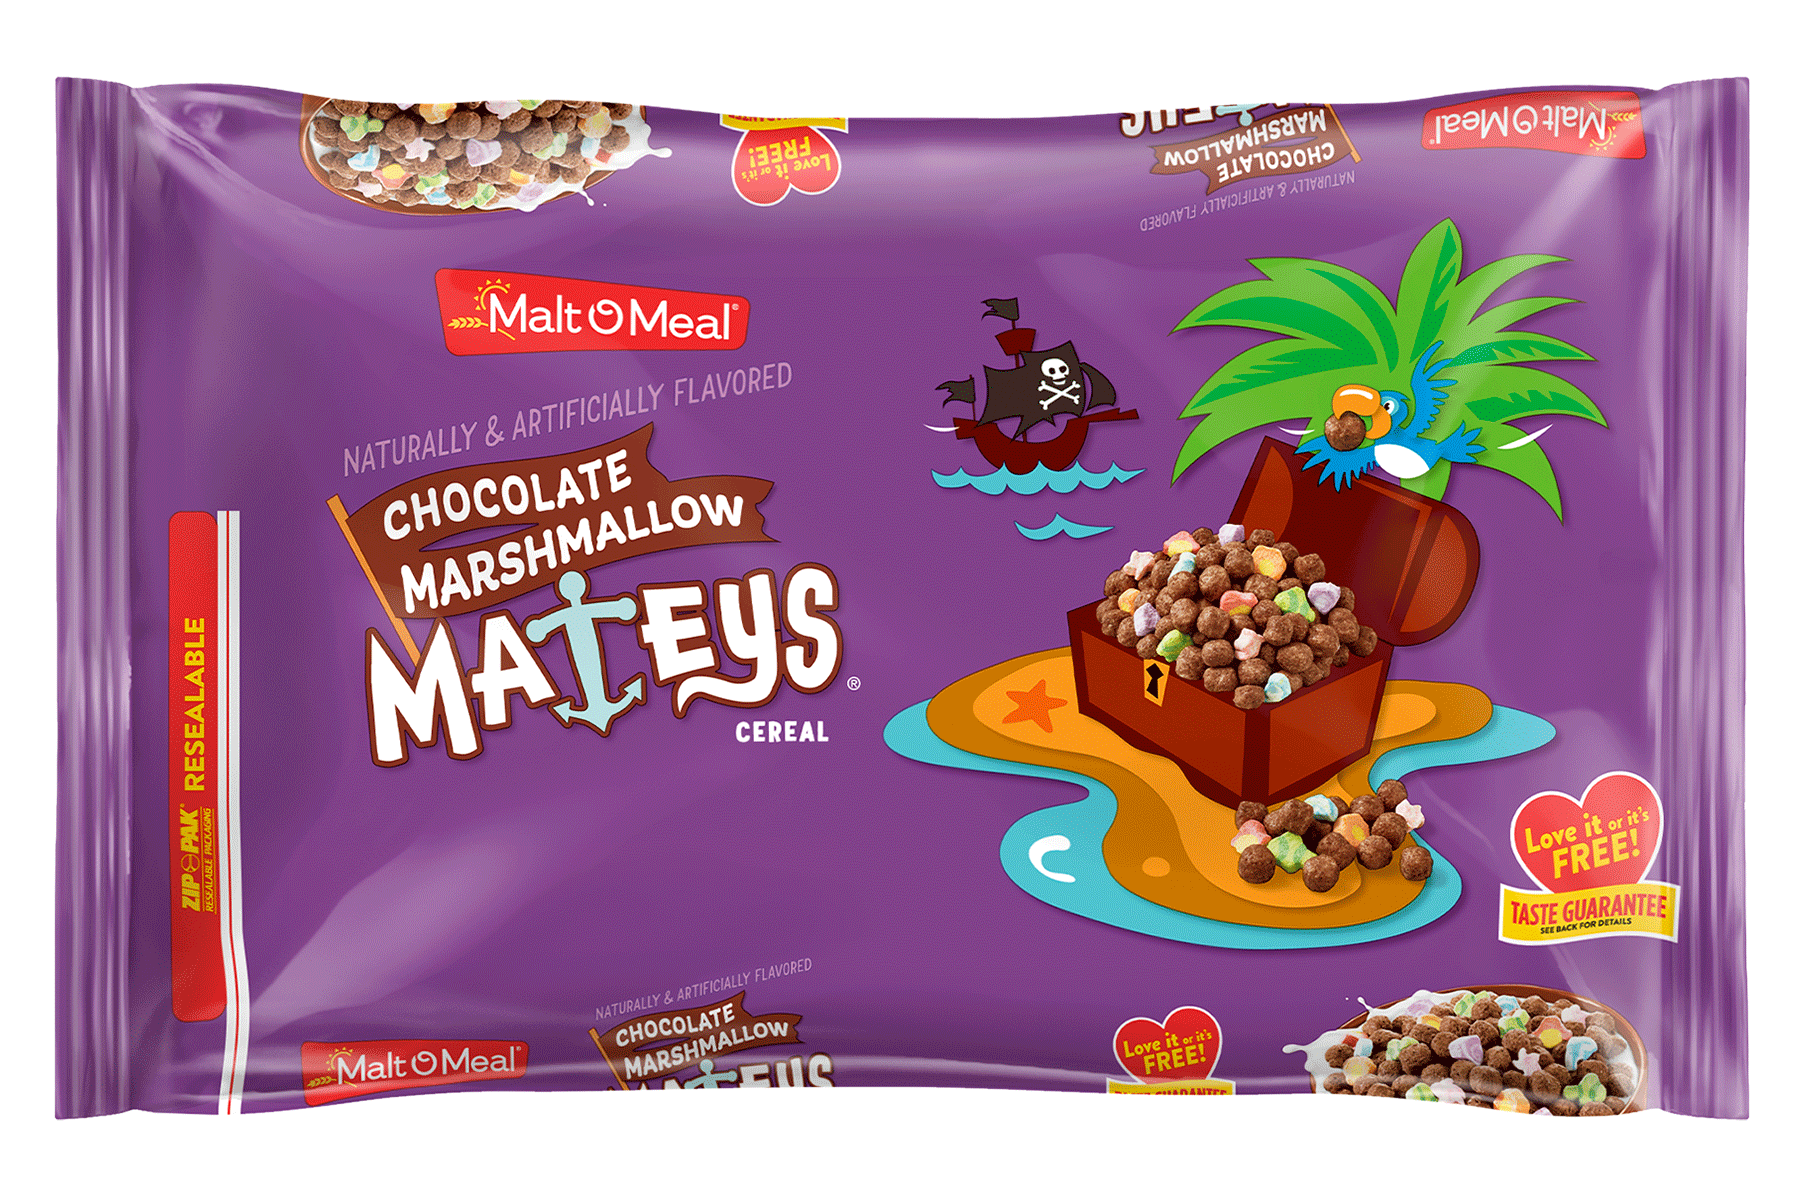 New Malt-O-Meal Chocolate Marshmallow Mateys Cereal Bag